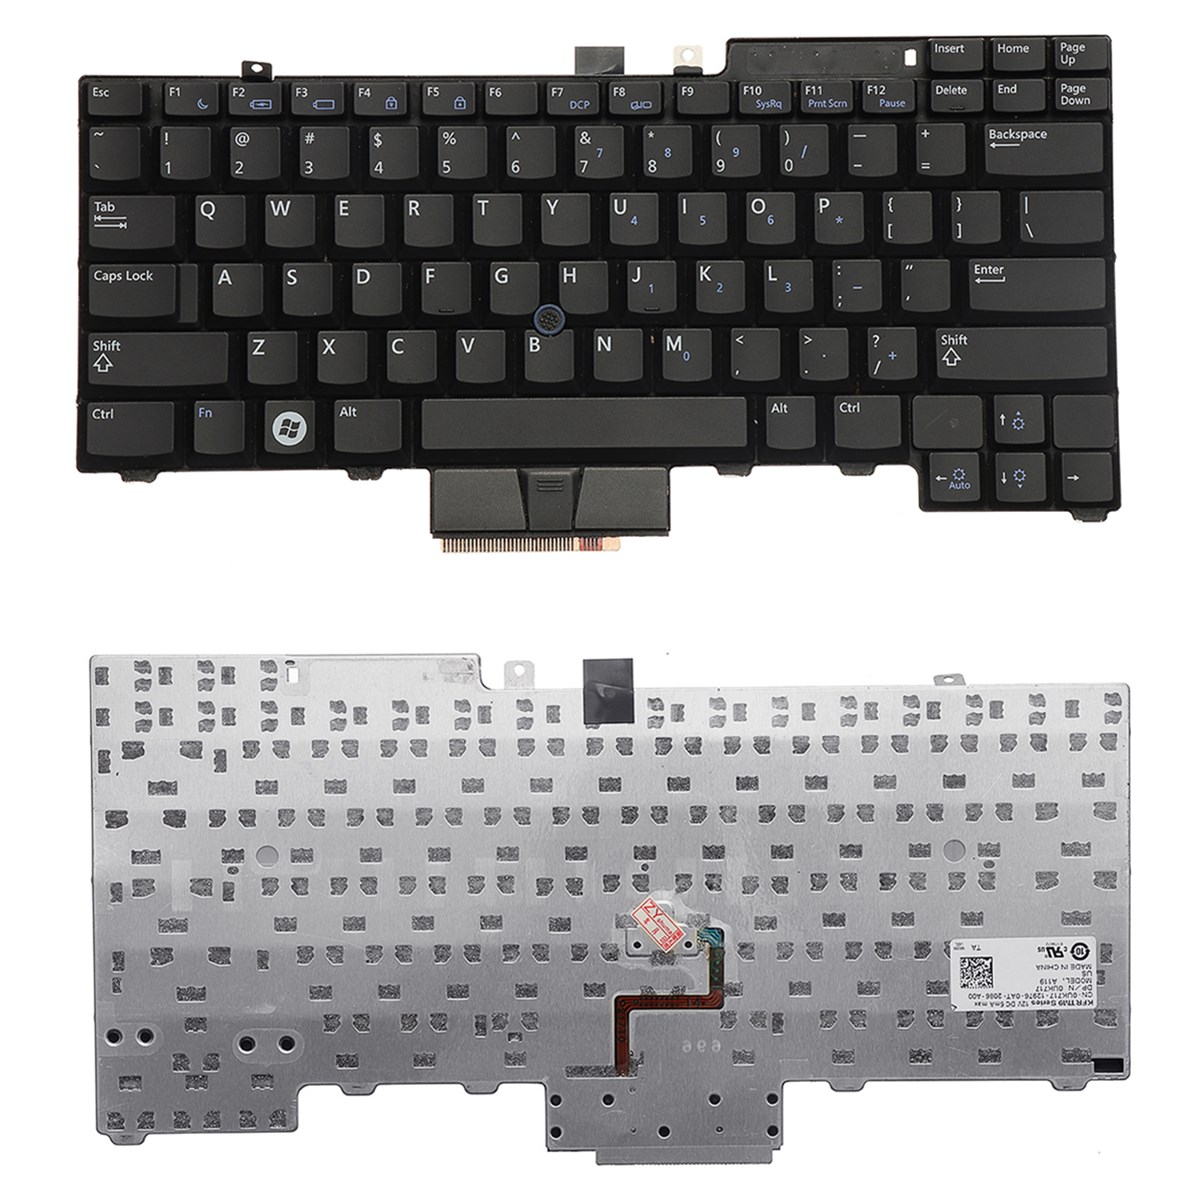 Dell Keyboard Manual